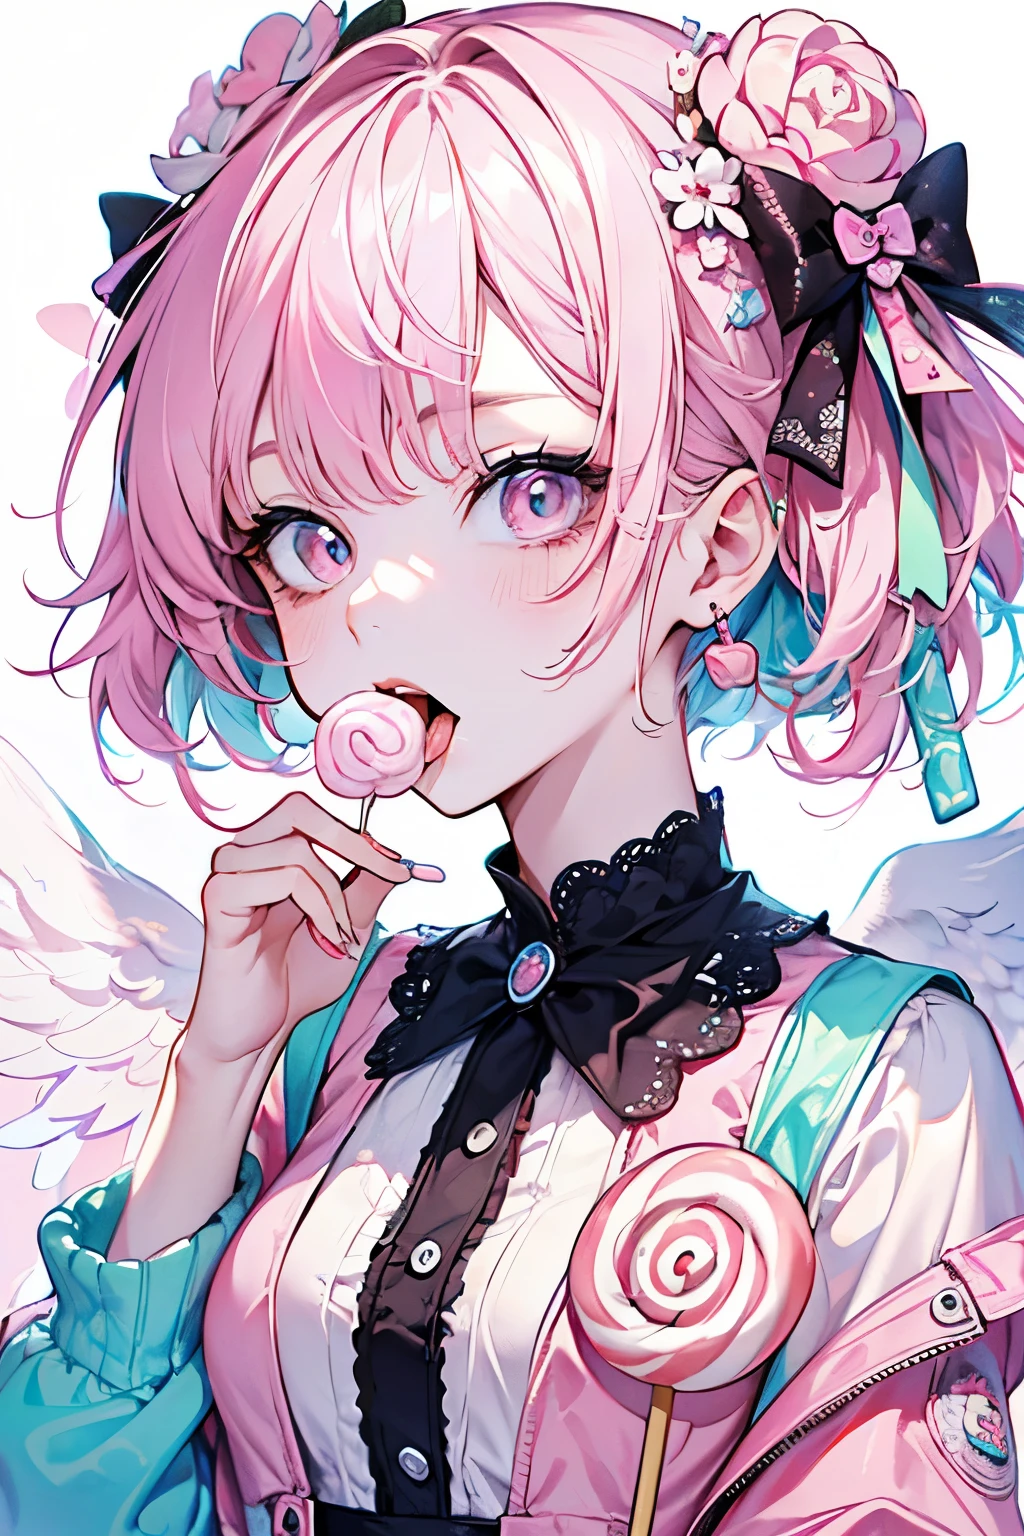 chibi character,Rabbit motif,(brush),((cute,kawaii,wonderland)),((pastel color)),((Cute assortment)),(),((Licking candy:1.3)),Shiny pink hair,(pastel pink),((Angel:1.2)),(Lollipop,Candy:1.25).